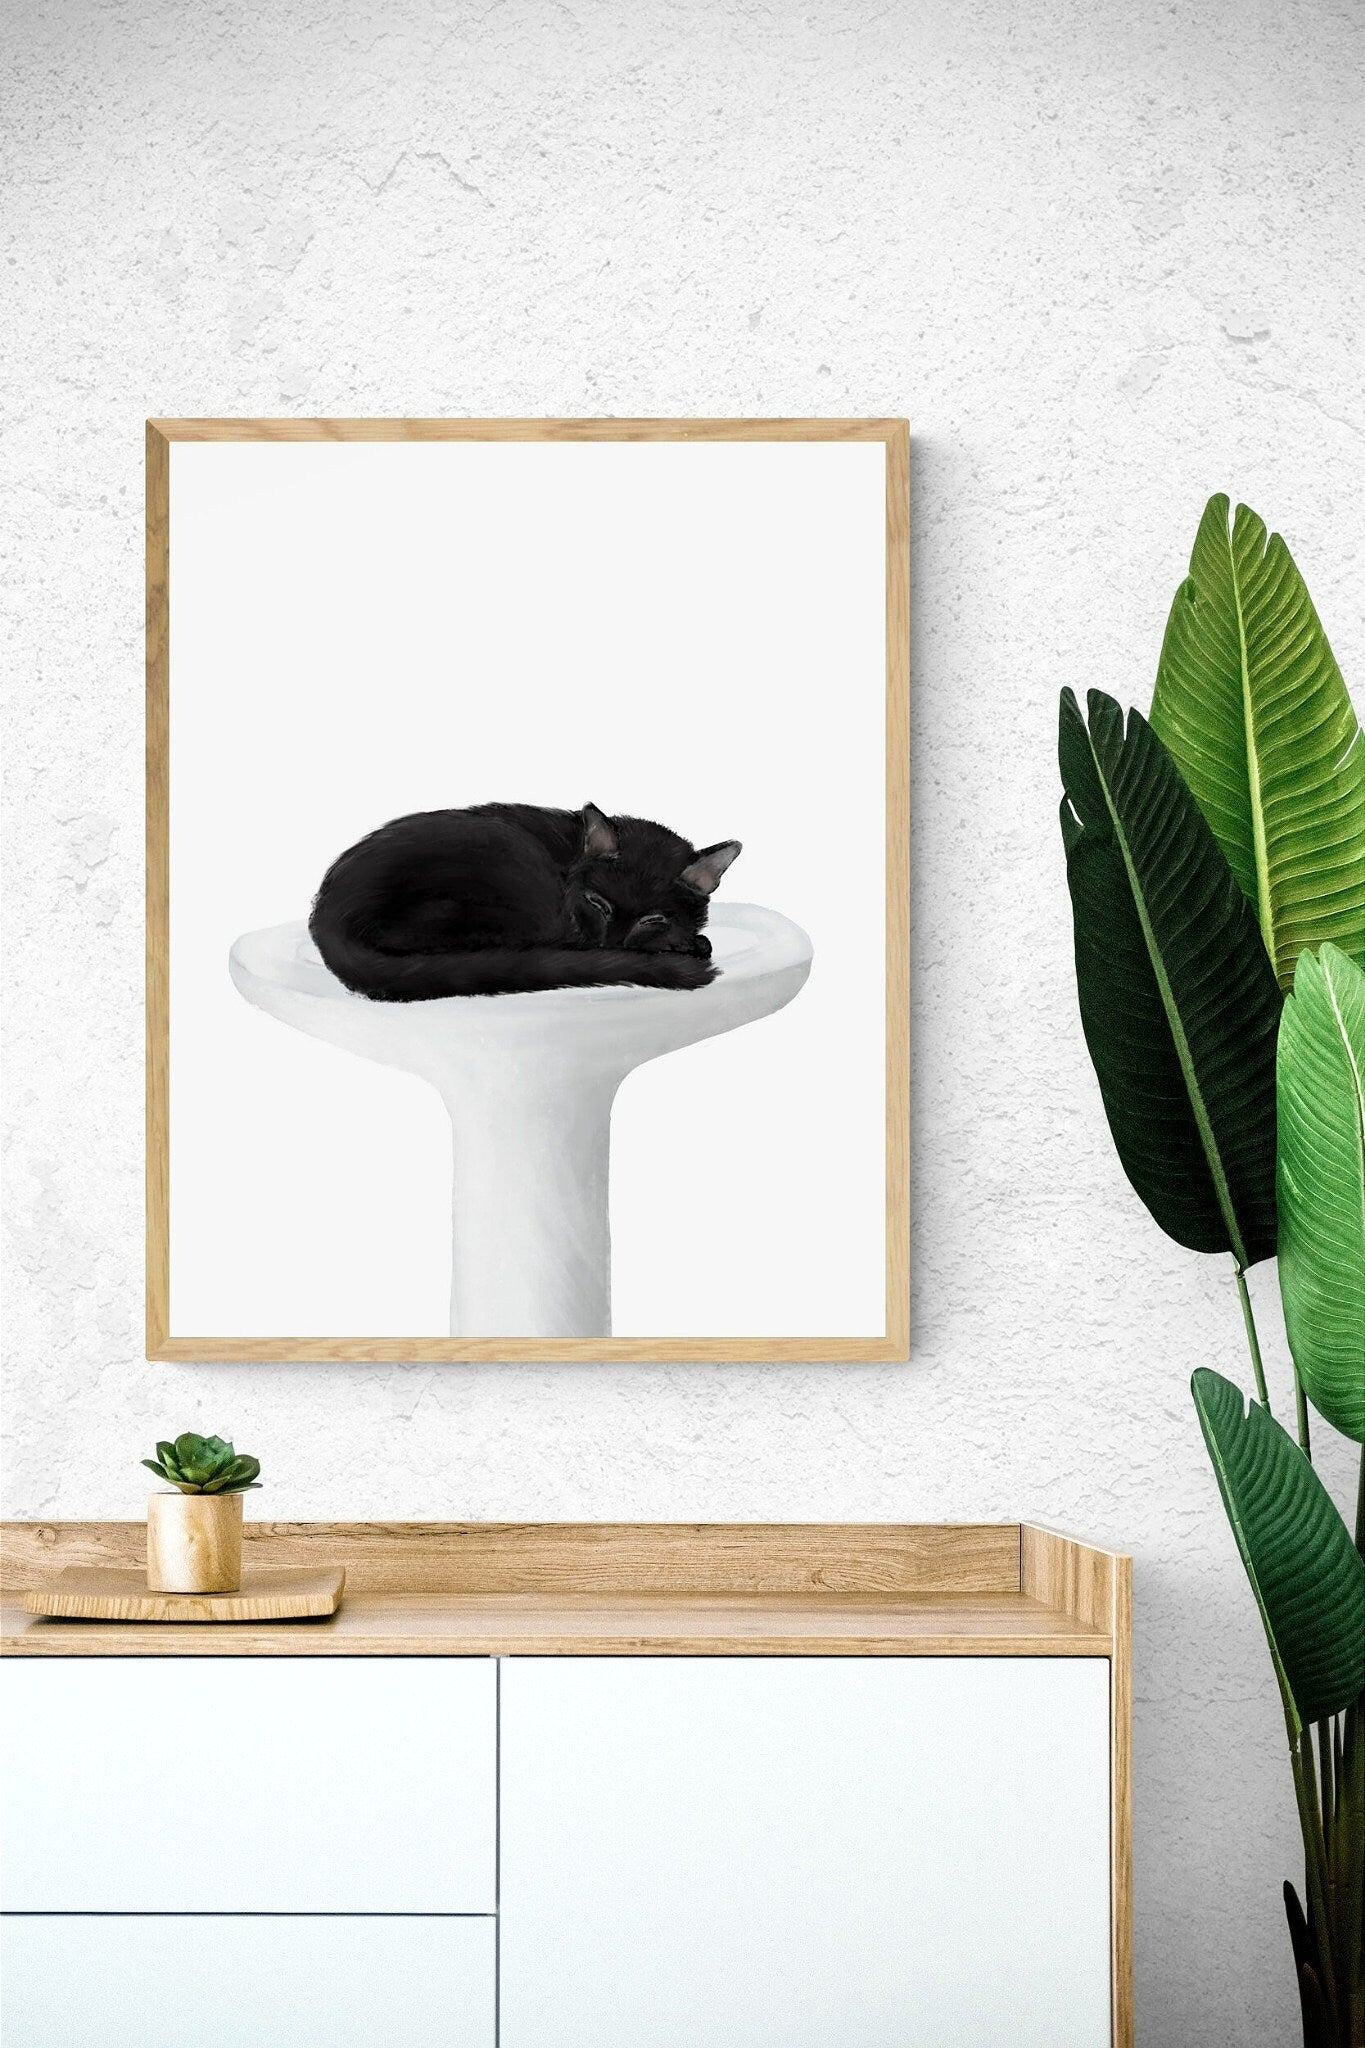 Black Cat Sleeping In Sink Art, Black Cat In Bath Print,  Black Kitten Art, Cat Illustration, Home Decor, Spa Cat Painting, Cat Lover